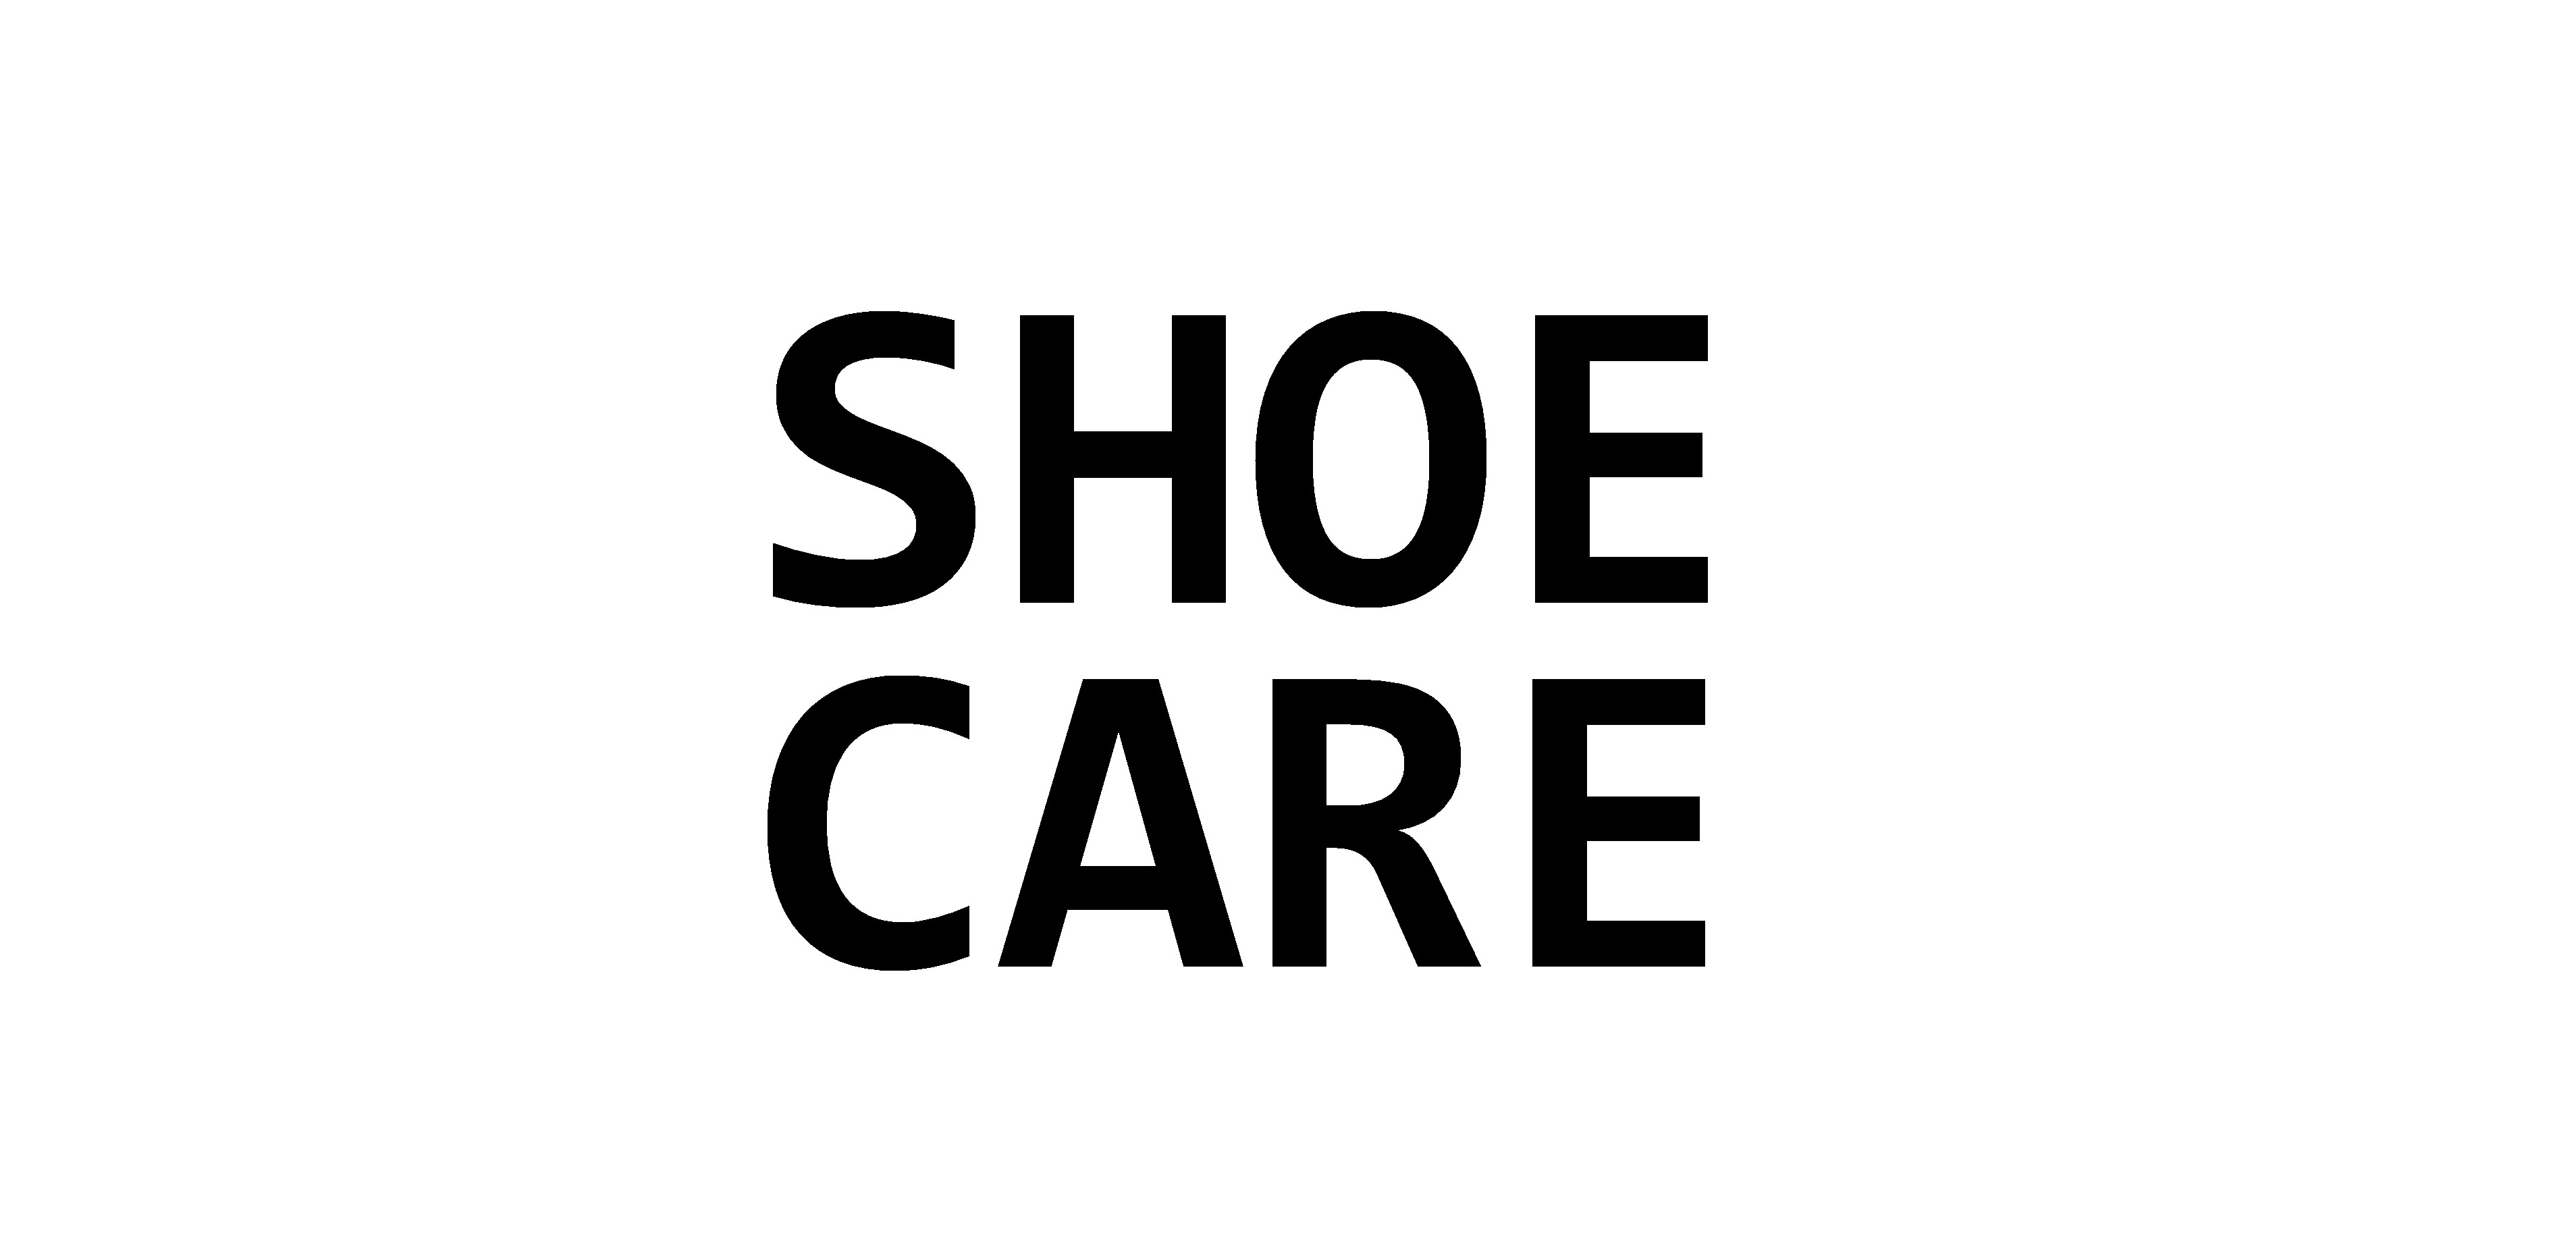 Shoe care logo